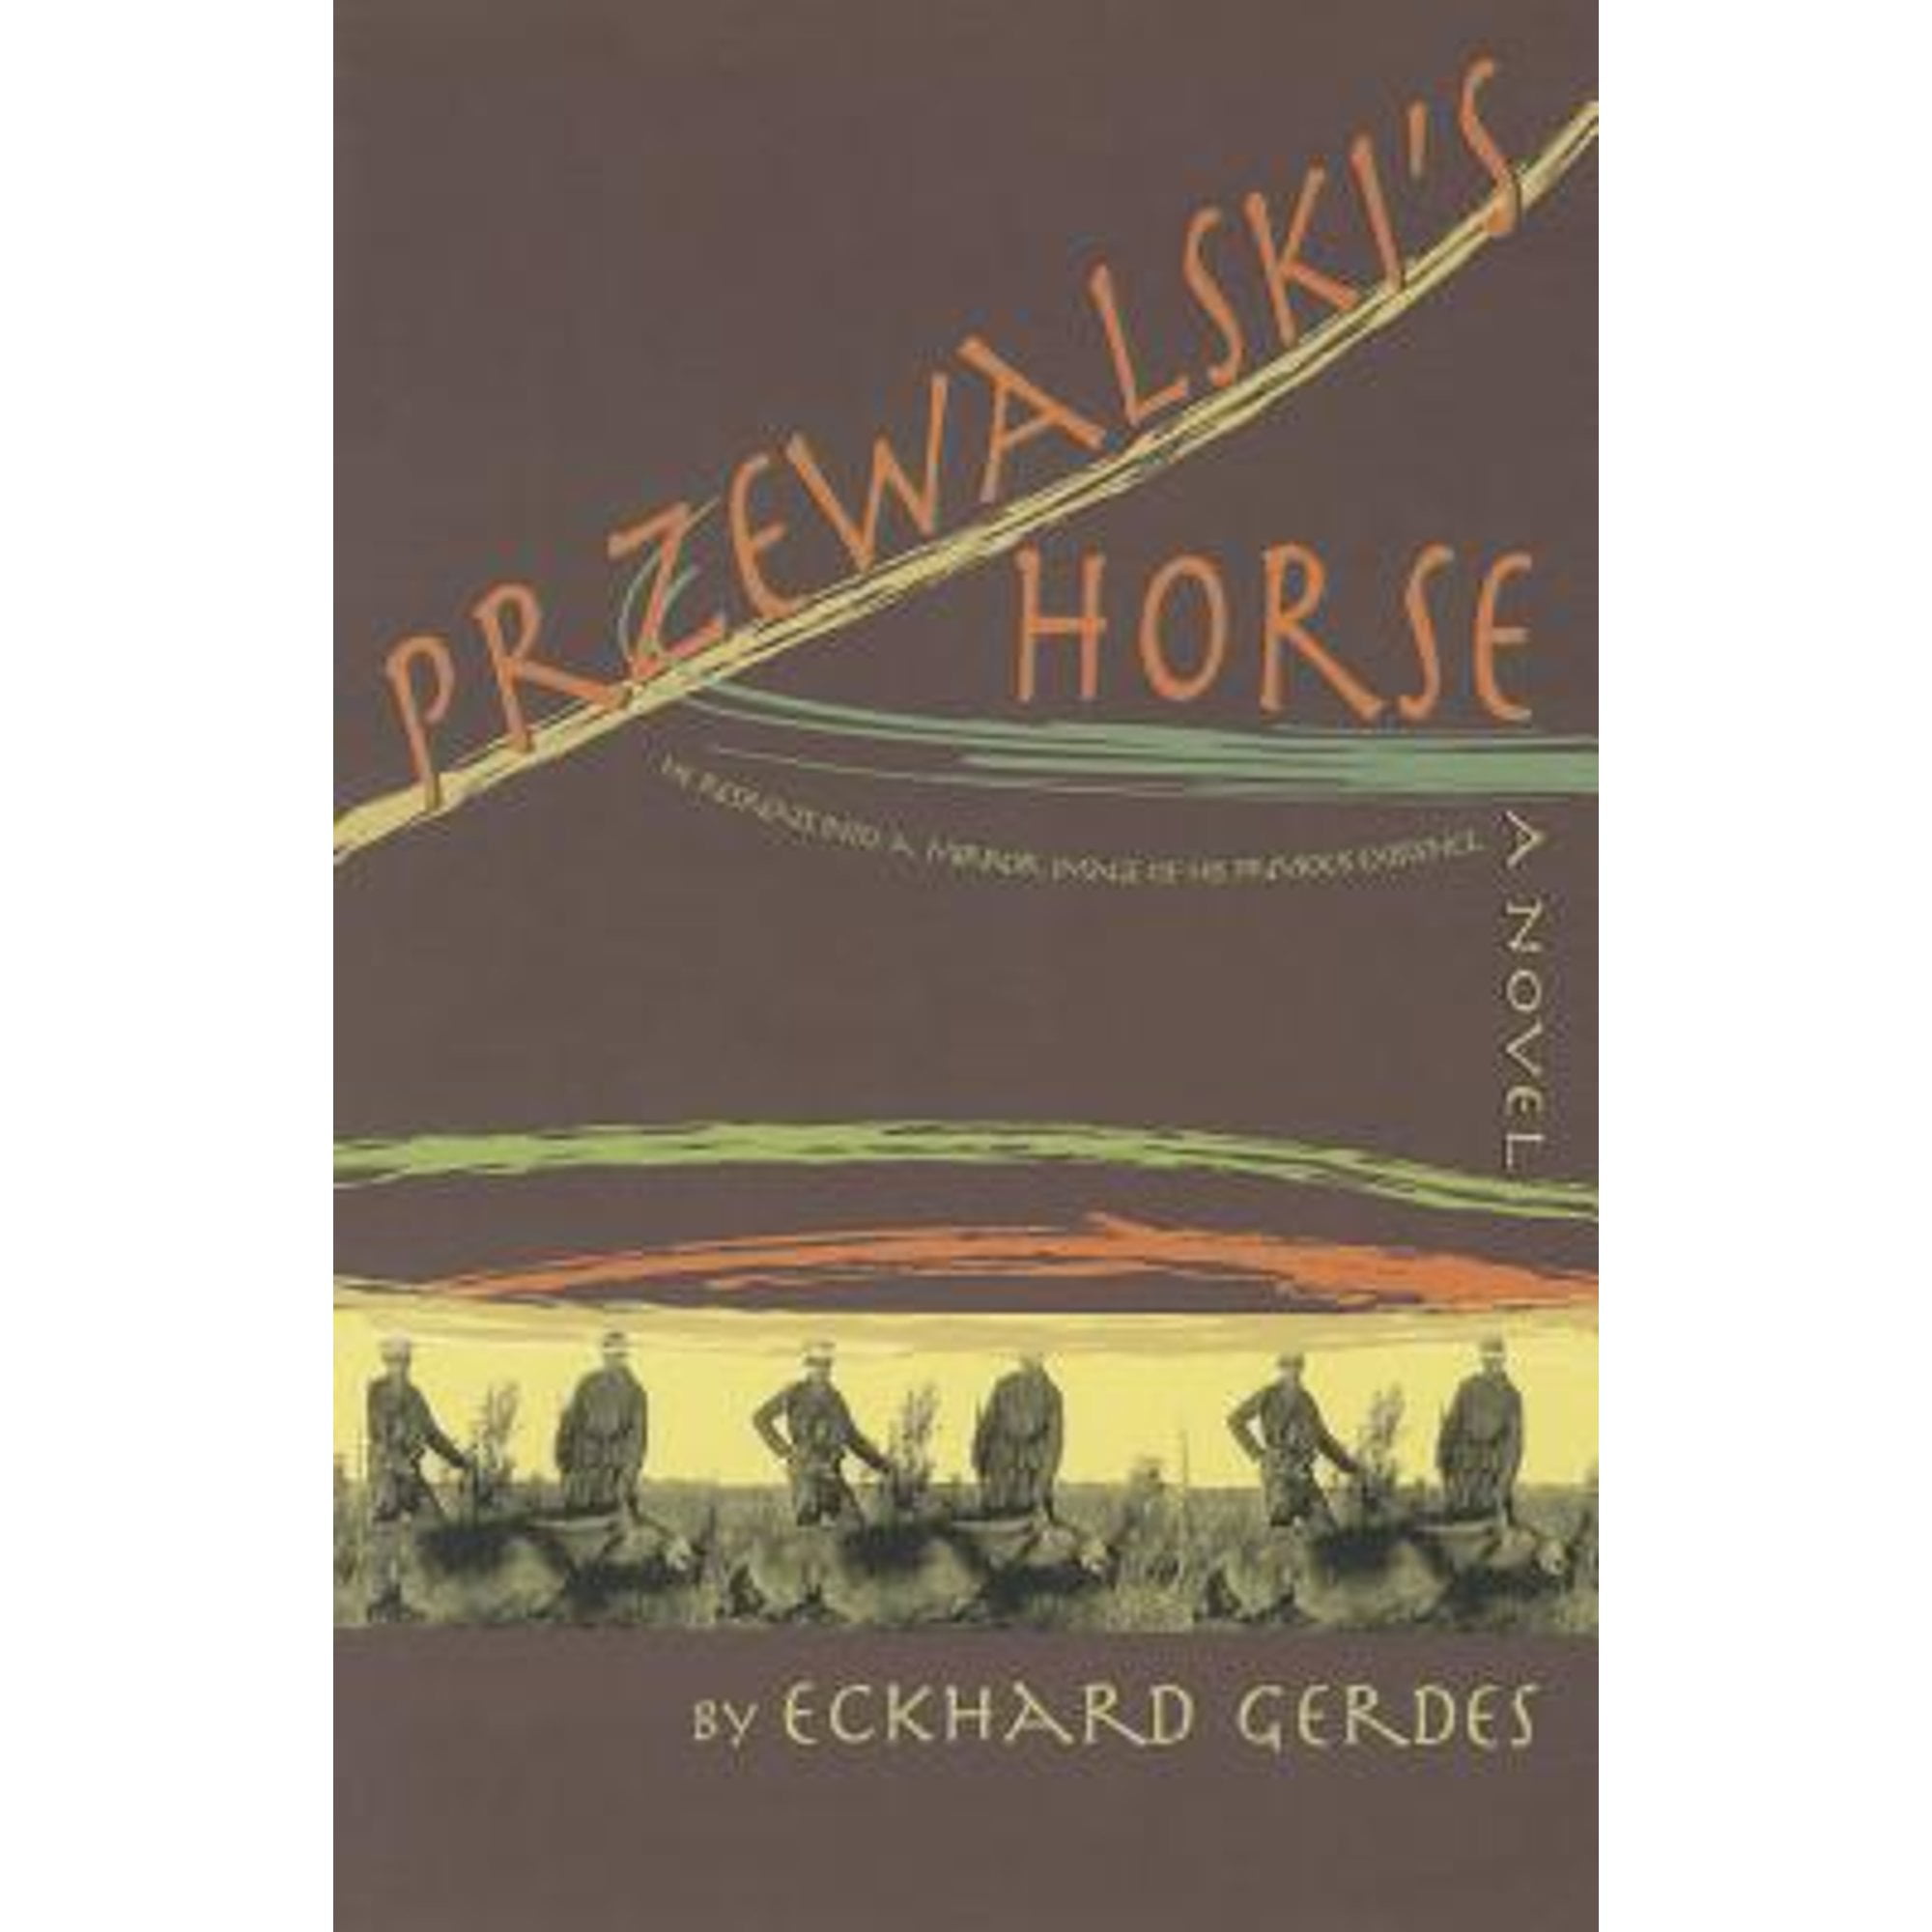 Pre-Owned Przewalski's Horse (Paperback 9781597090209) by Eckhard Gerdes